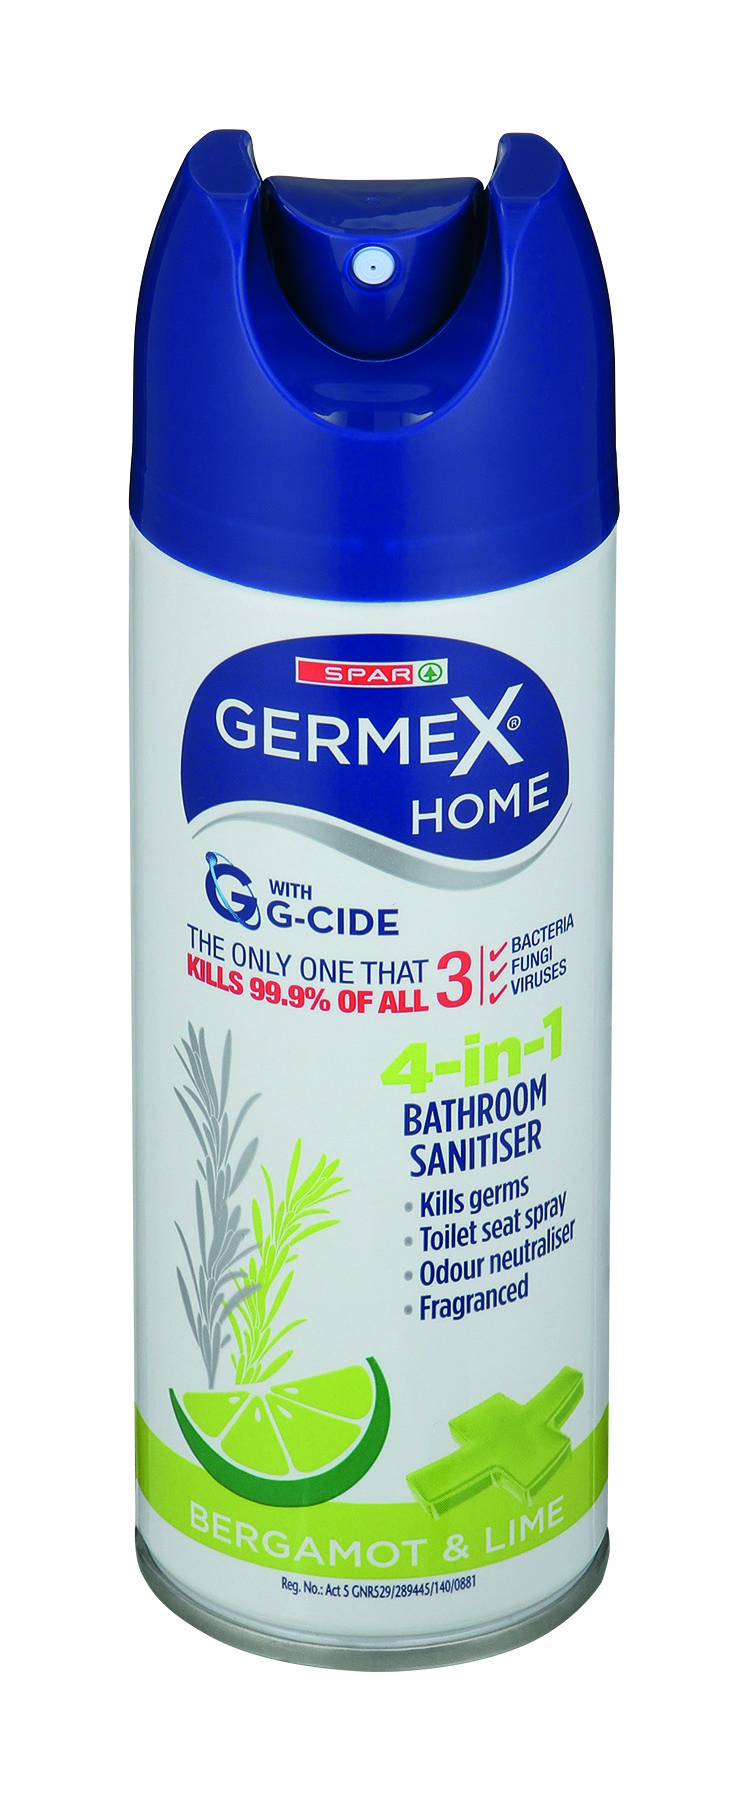 germex bathroom sanitiser bergamot and lime